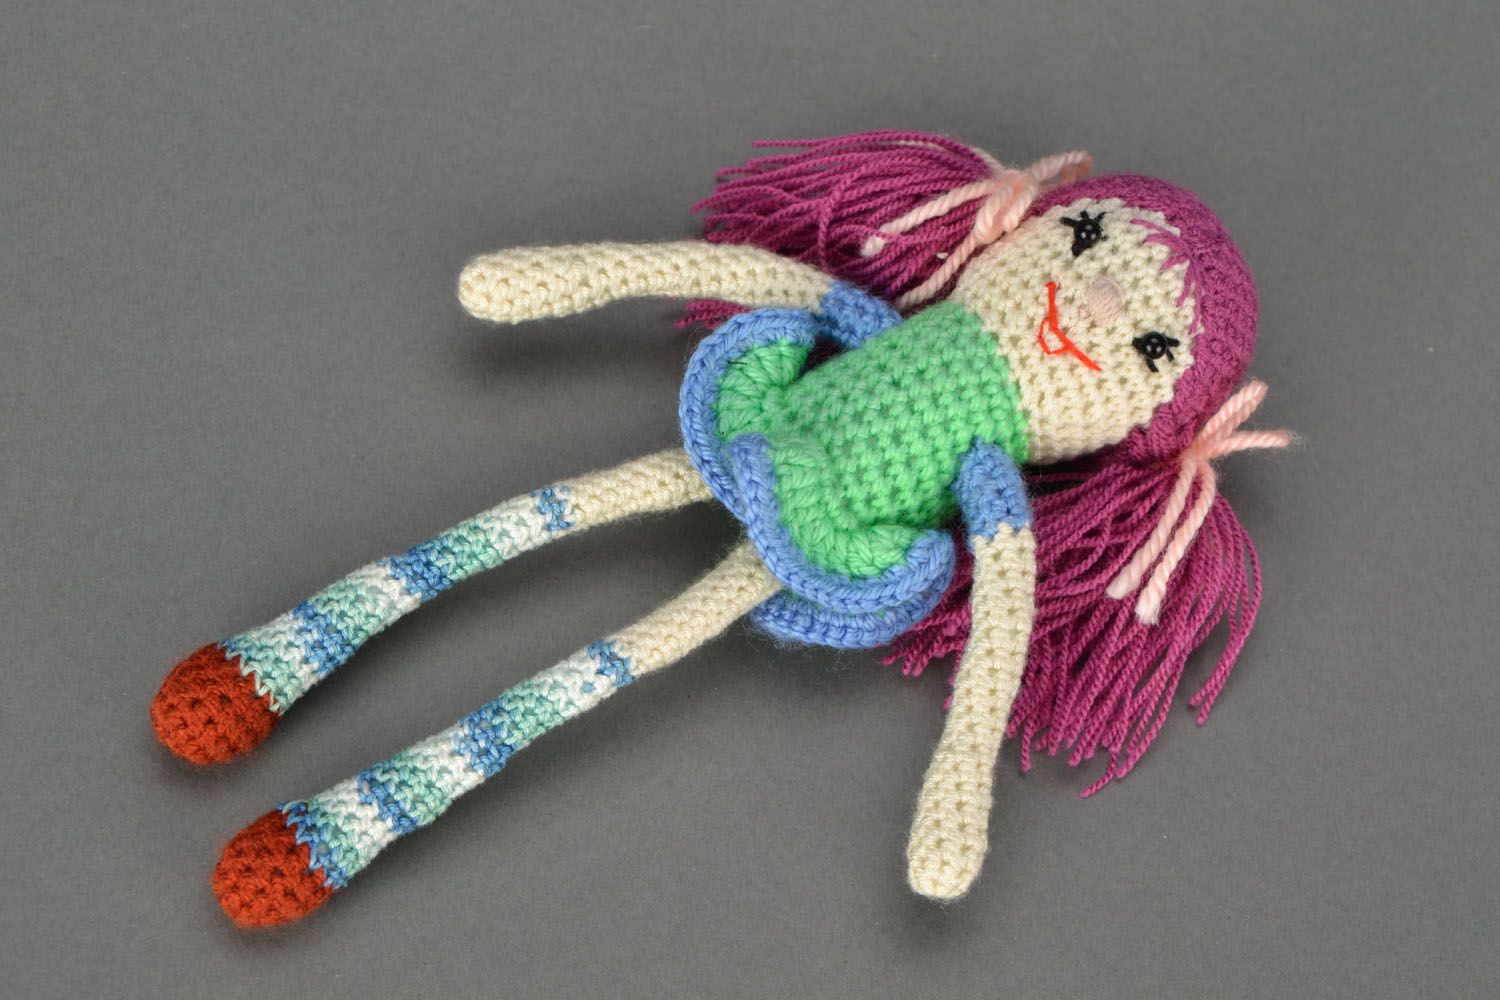 Crochet doll photo 2